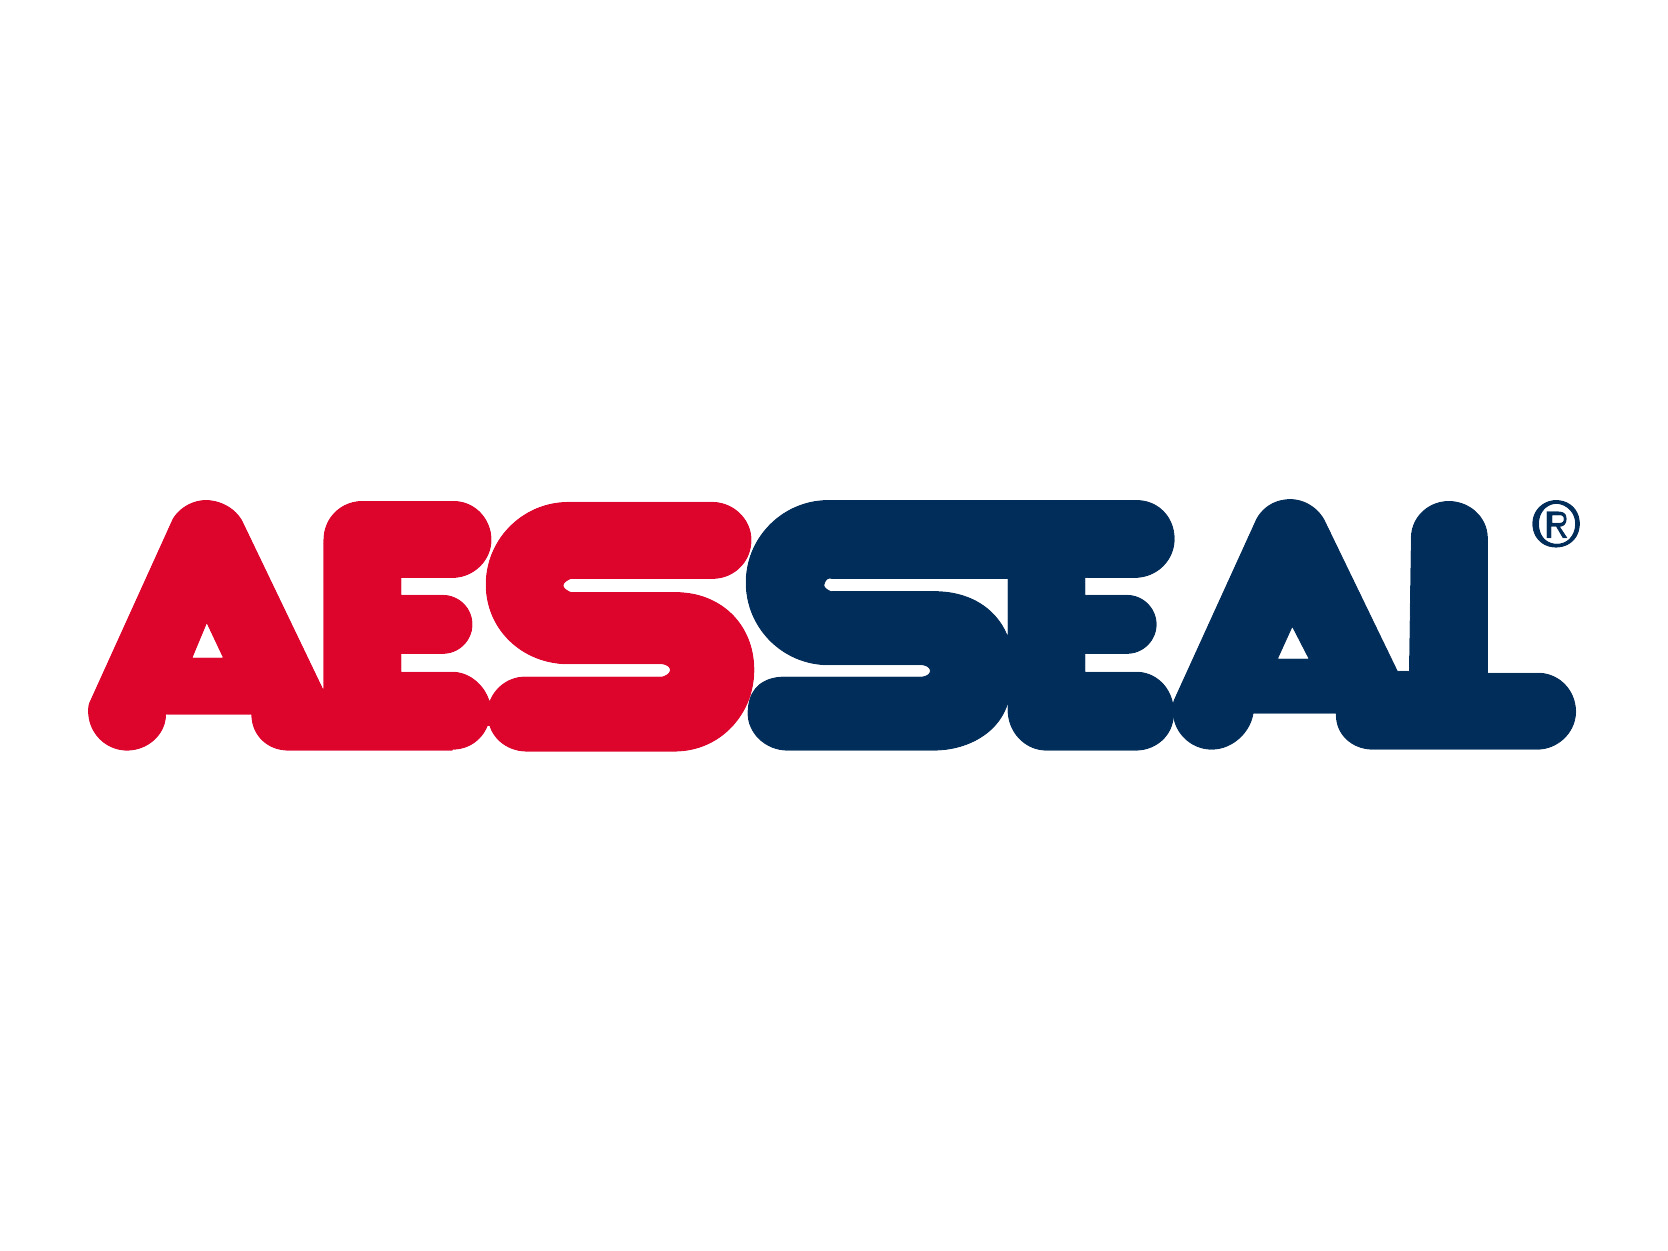 AESSEAL logo 